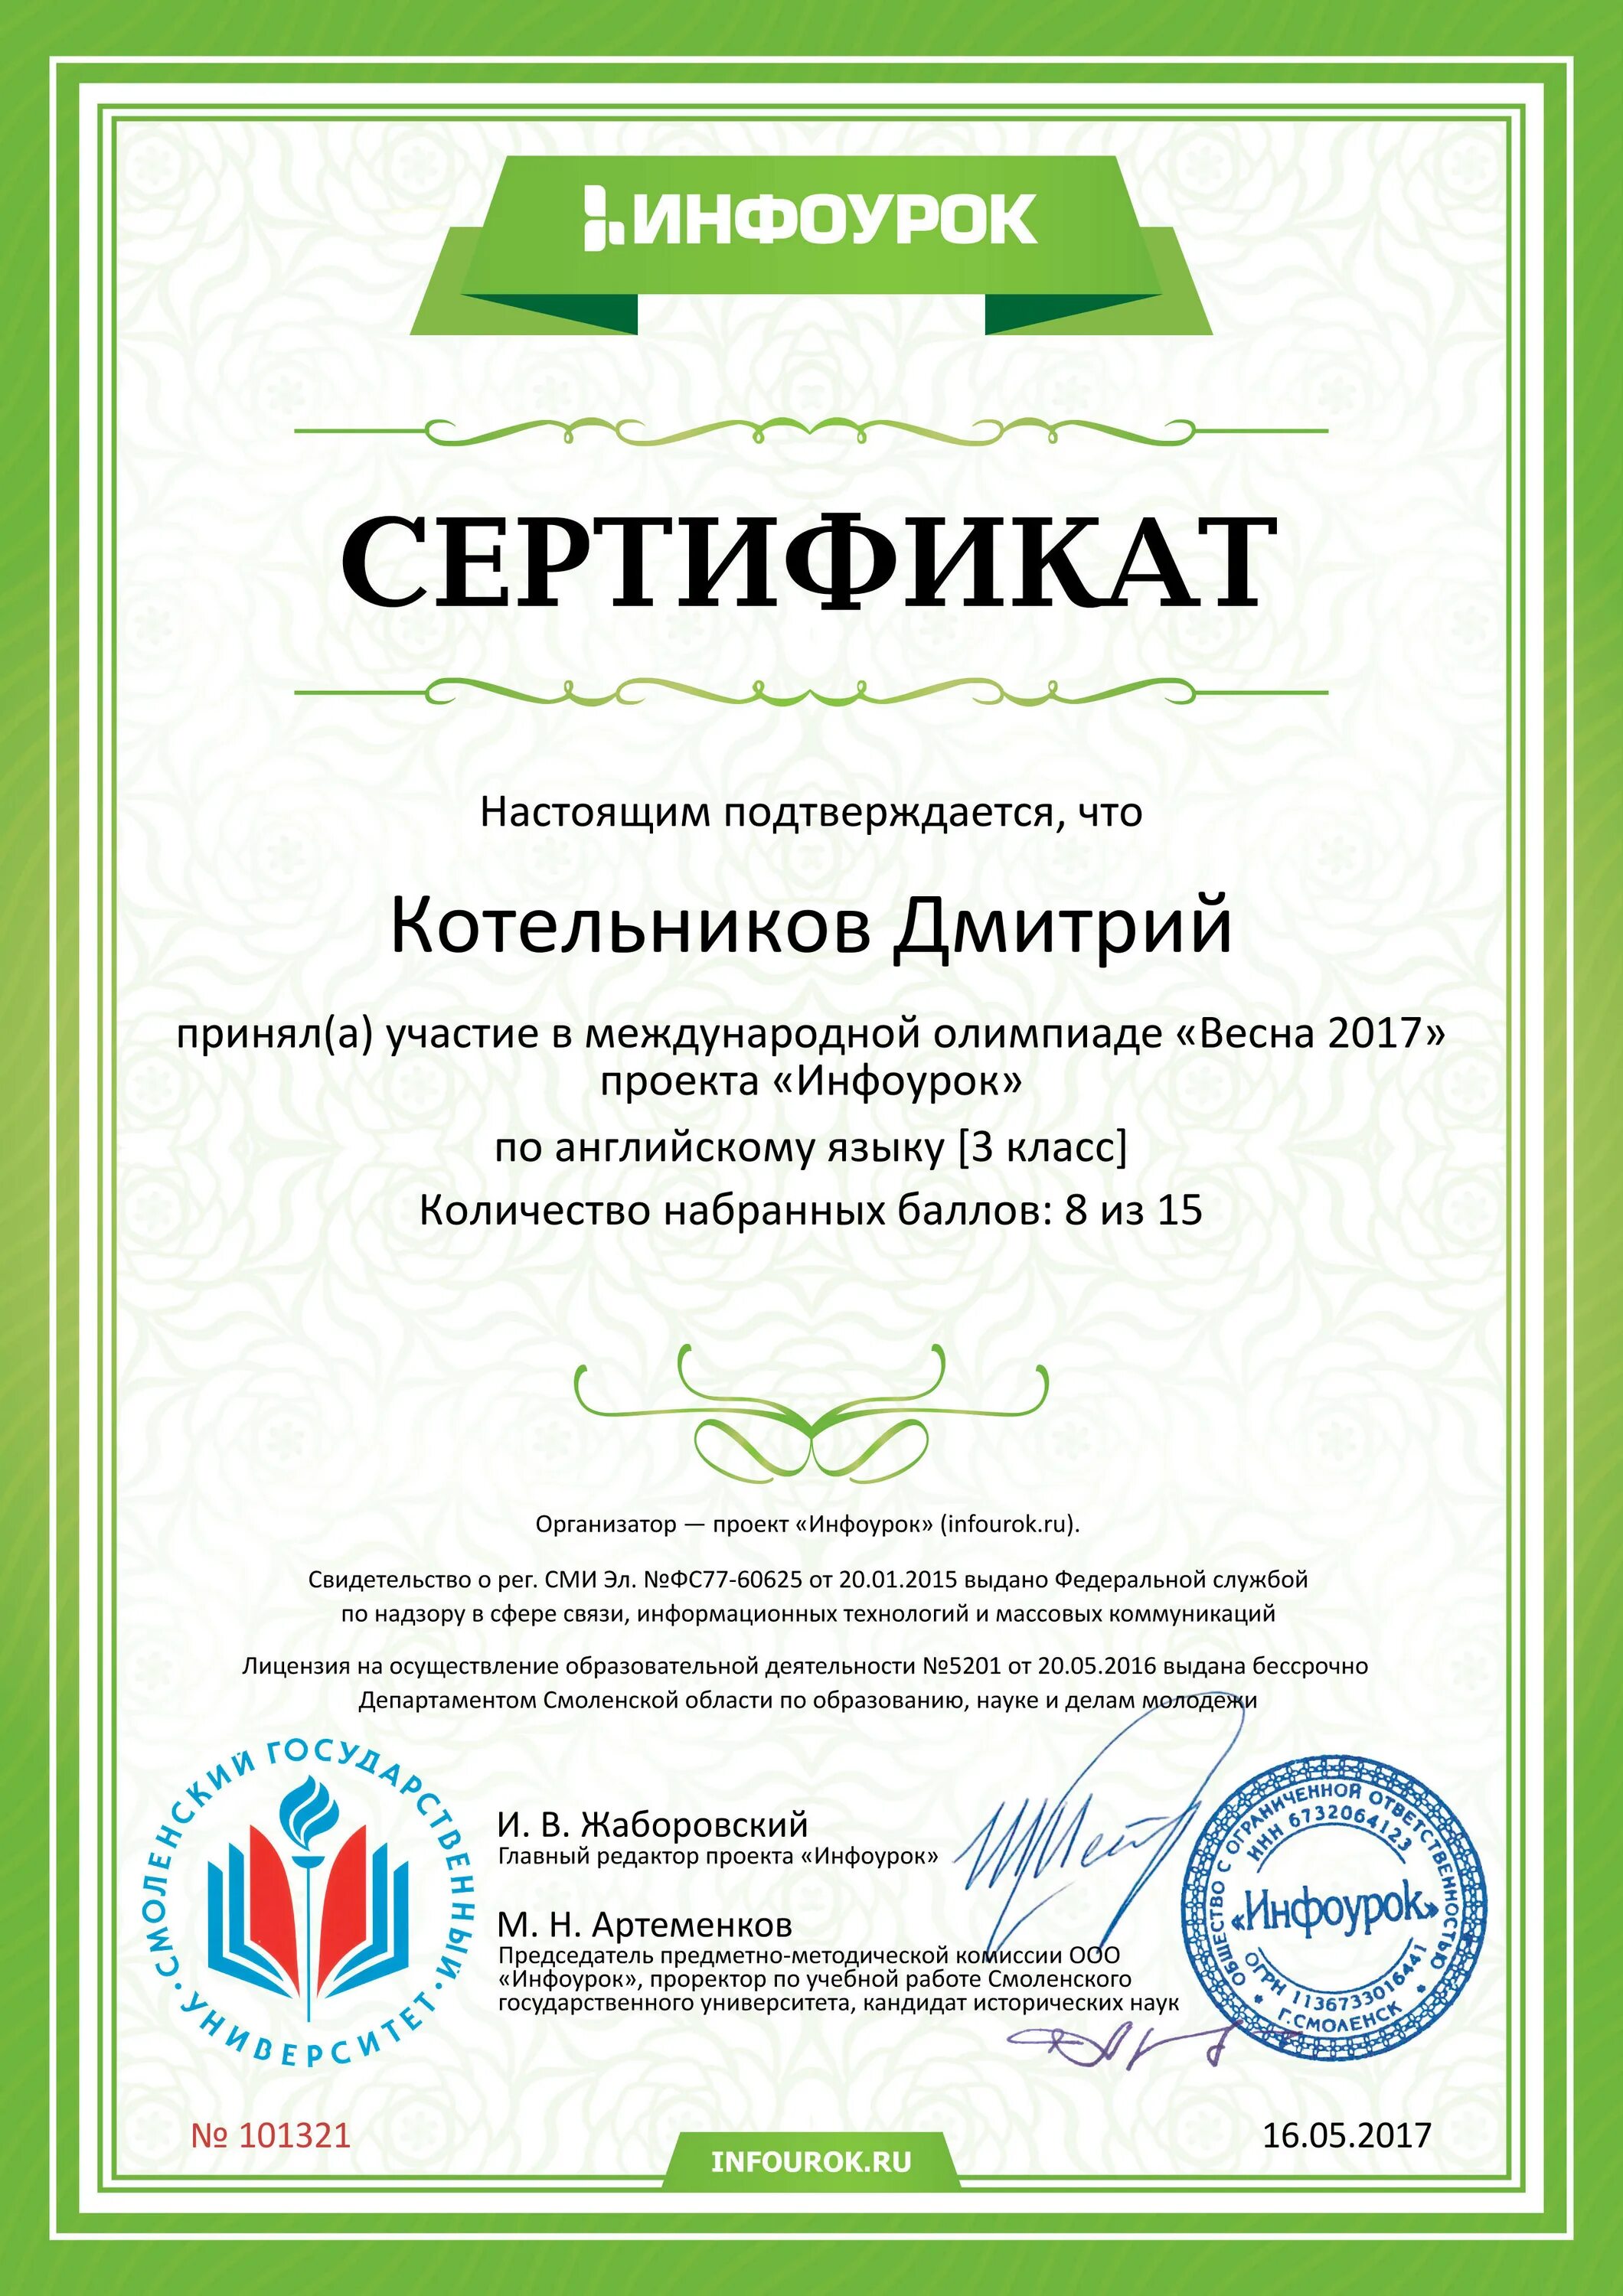 Урок infourok ru. Сертификат Инфоурок. Инфоурок дипломы сертификаты.